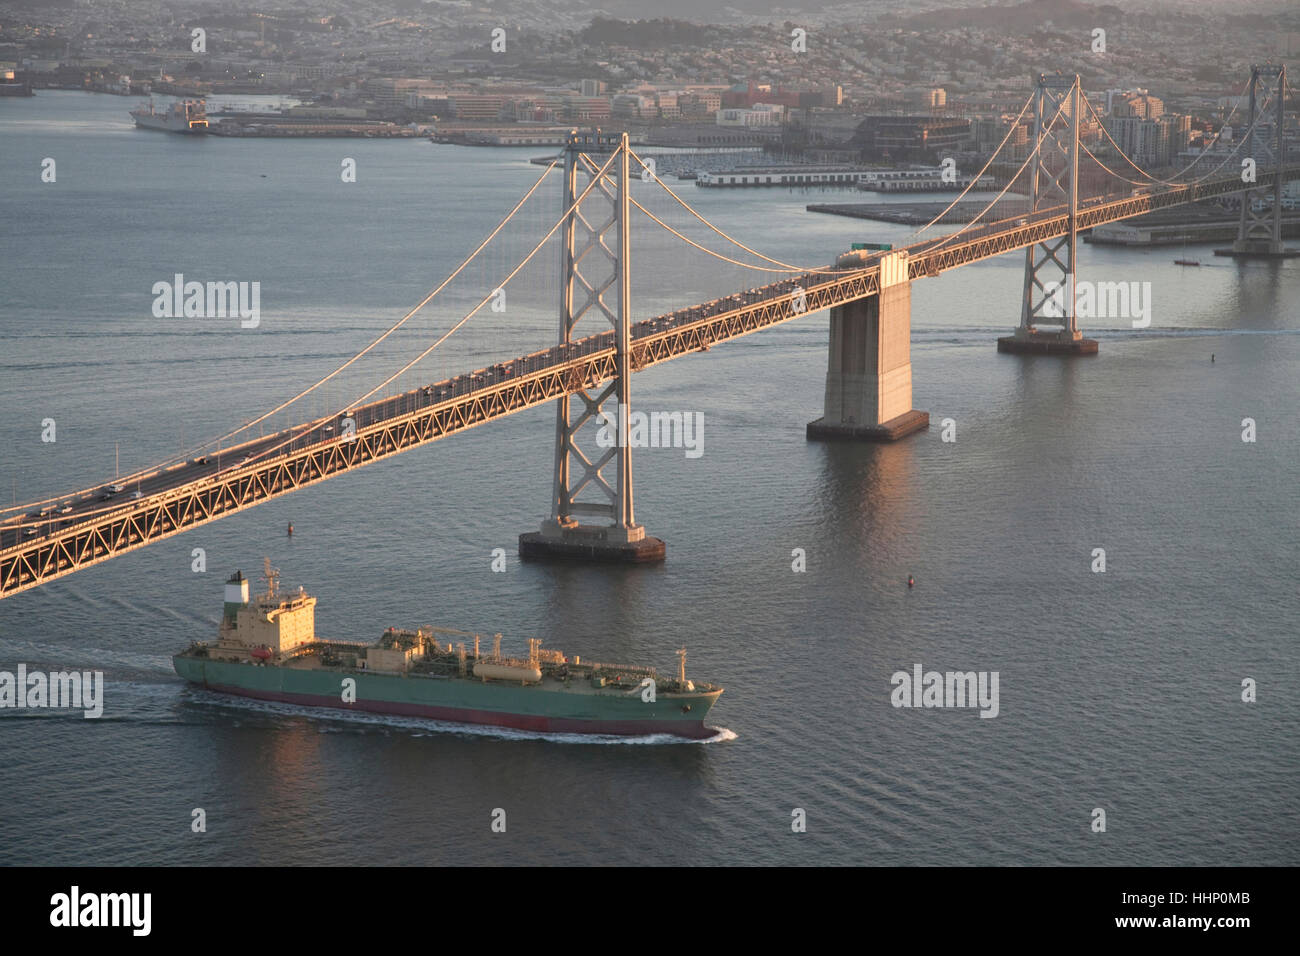 Aerial view of freighter under urban bridge Stock Photo